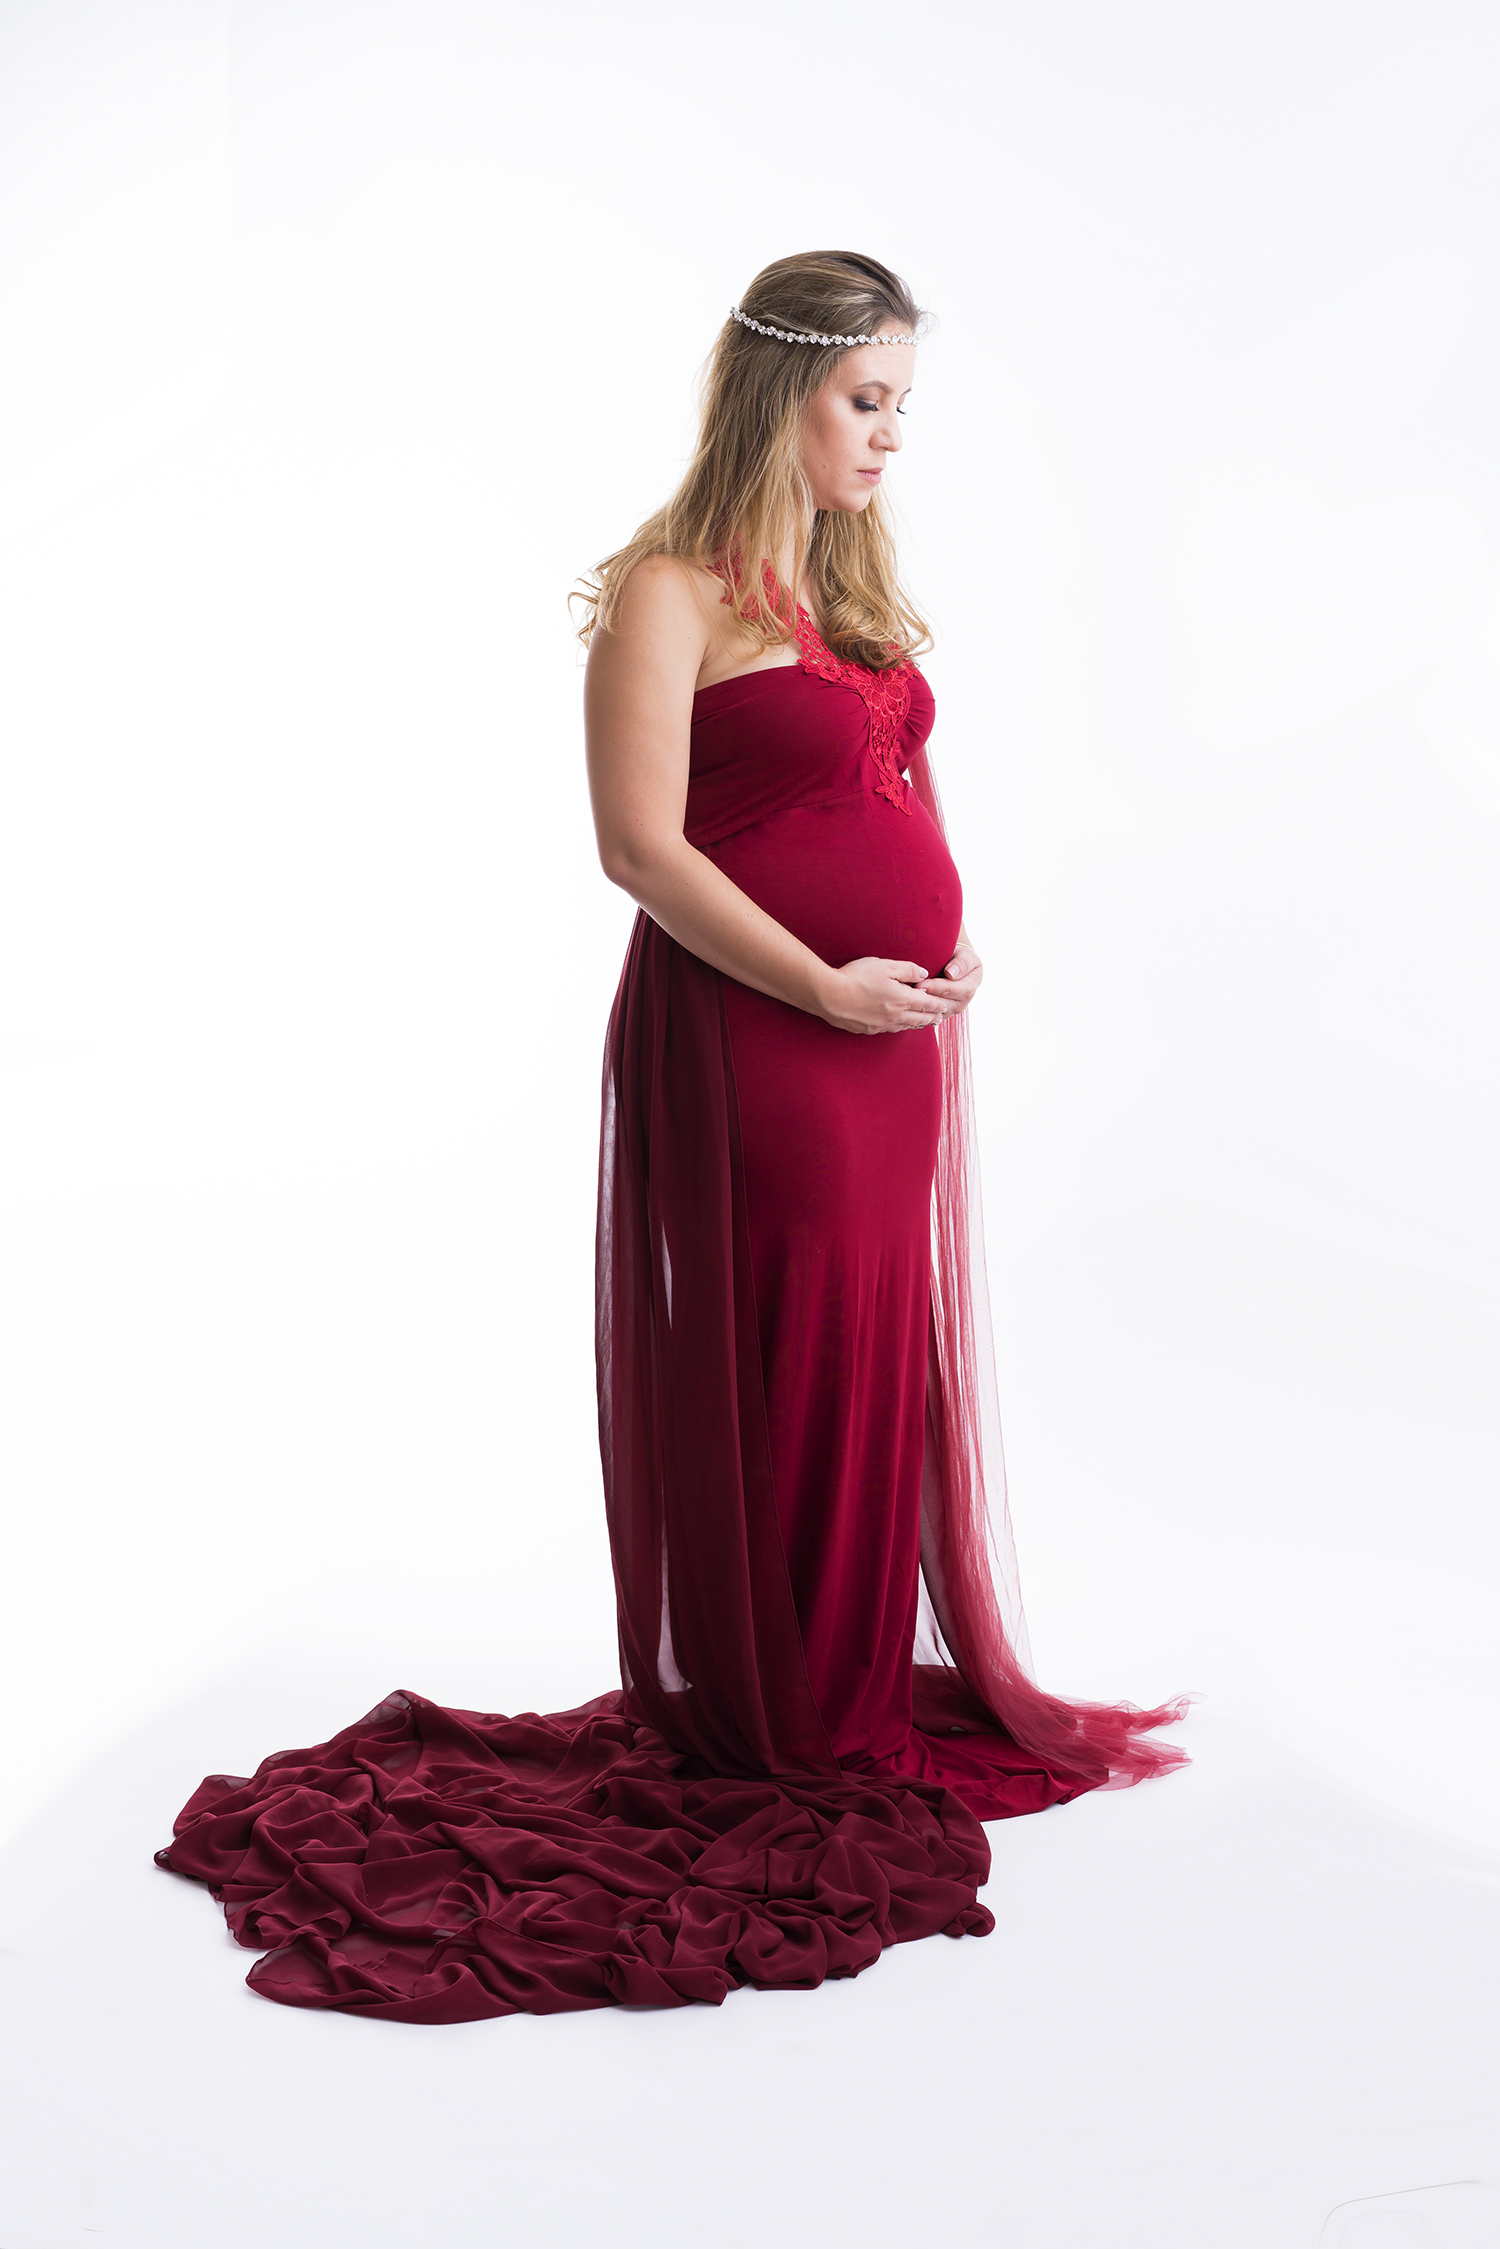 Perth Maternity Portrait Studio client